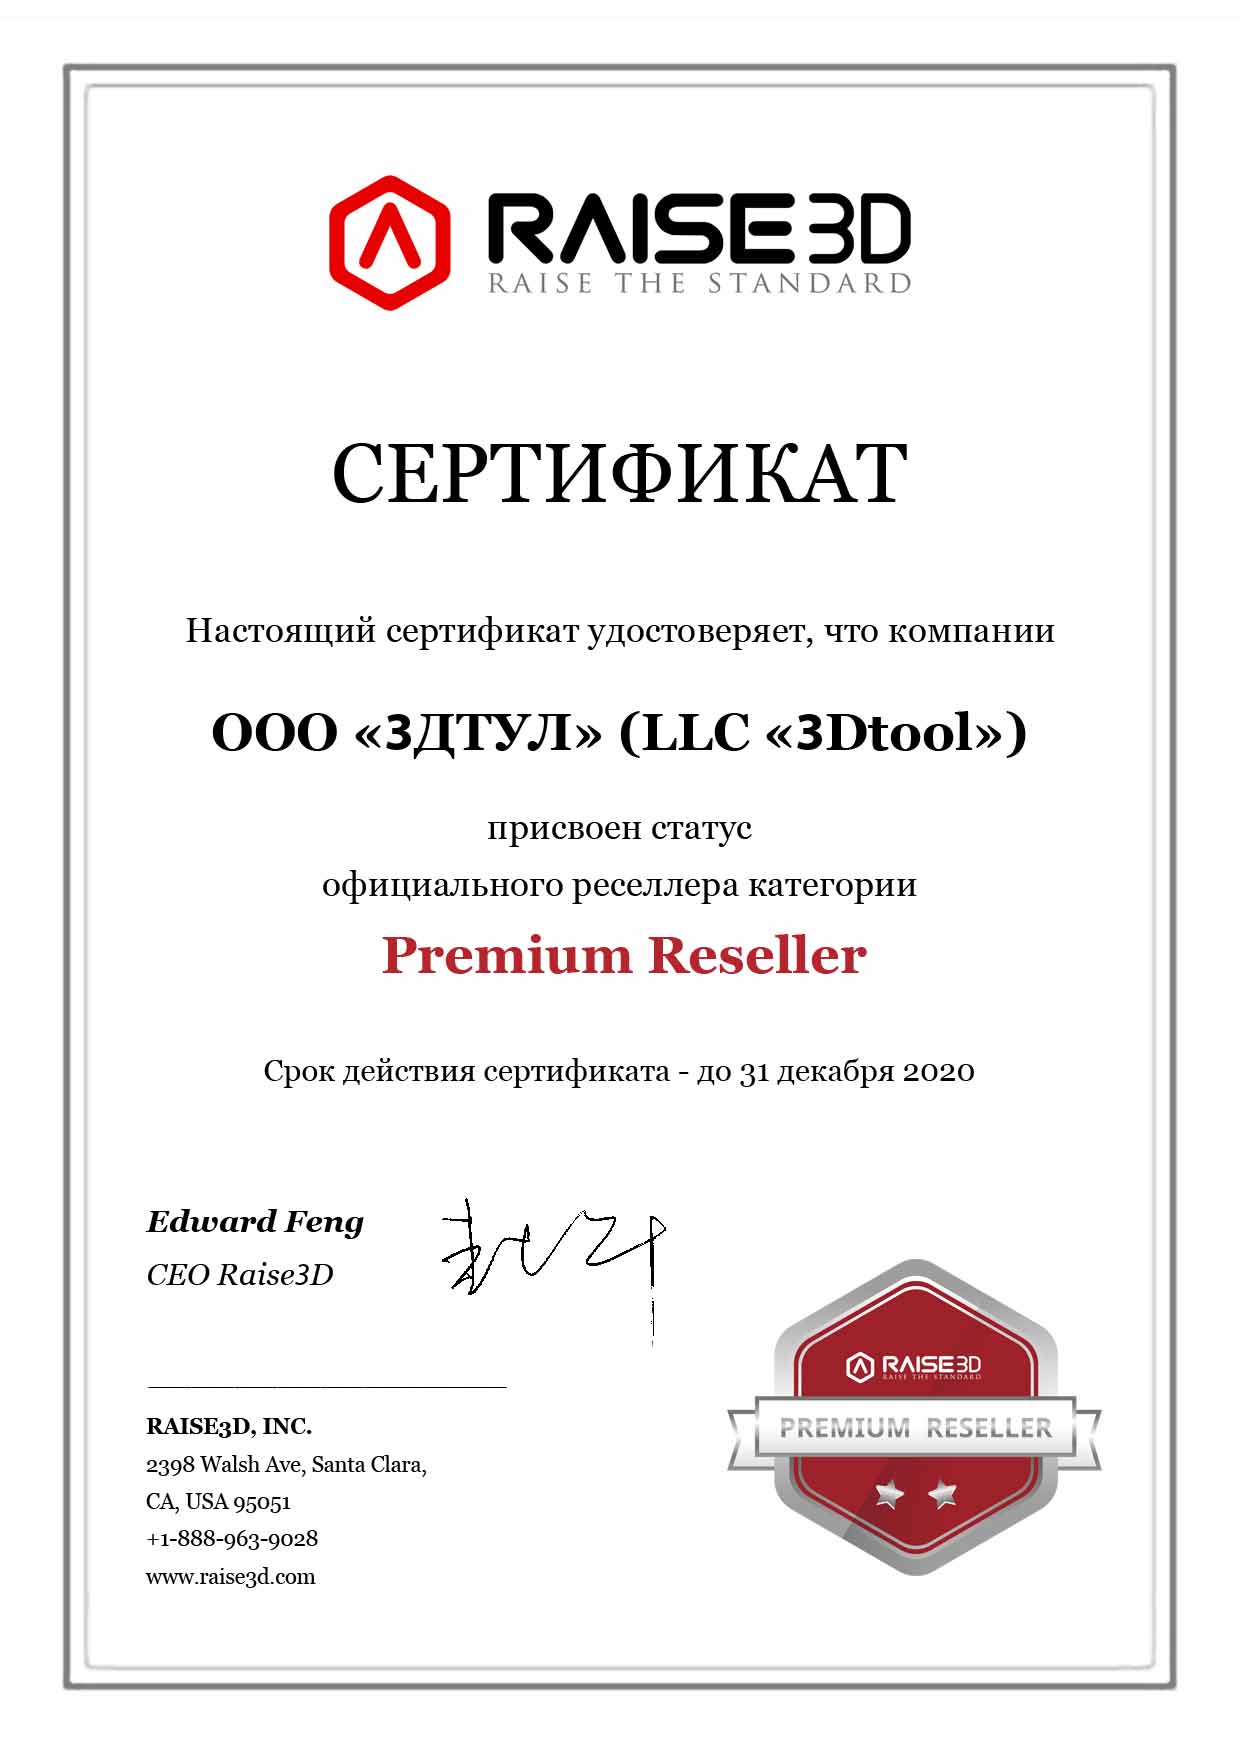 Raise3D certificate 2020